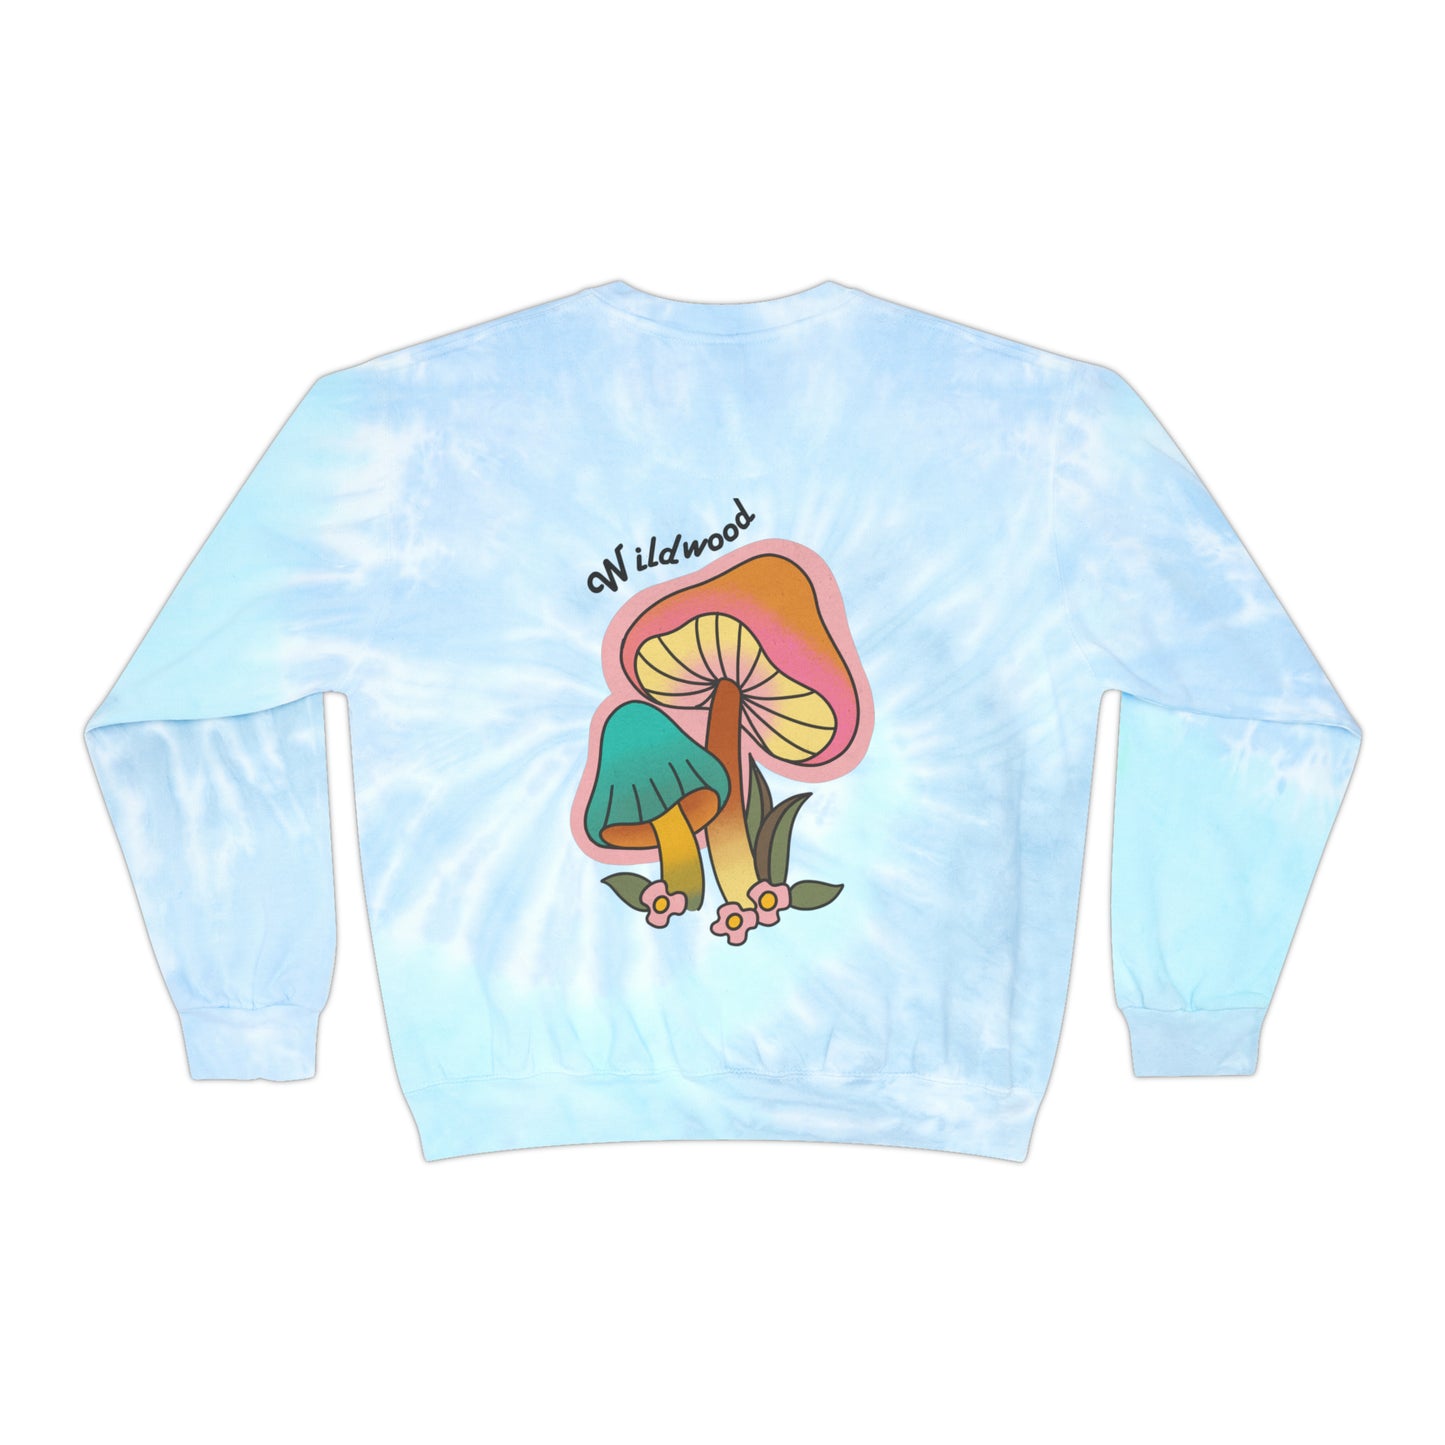 Wildwood Retro Mushroom Hippy Unisex Tie-Dye Sweatshirt